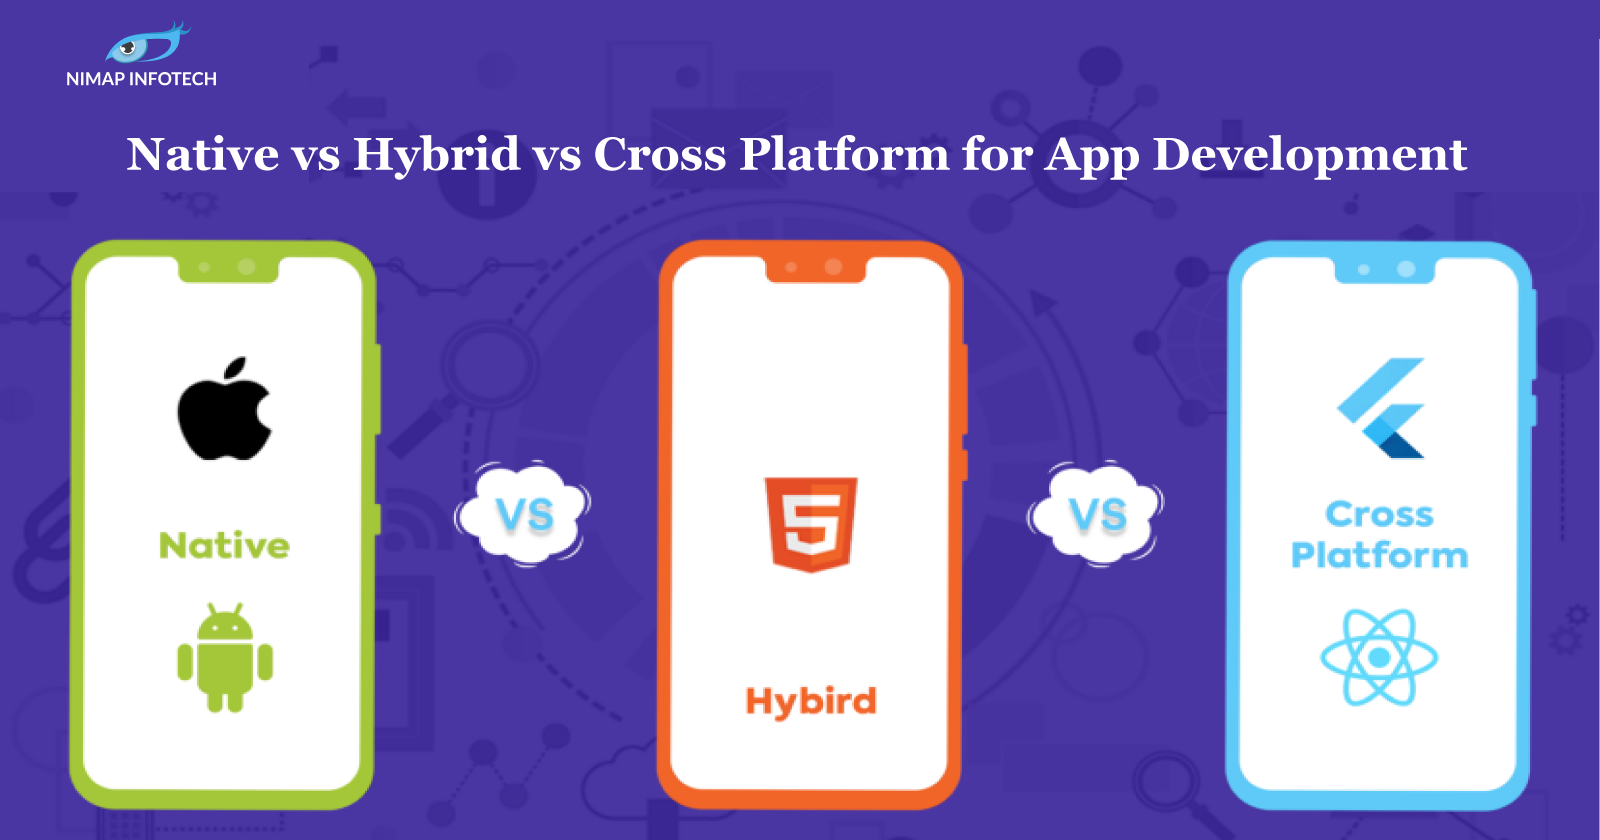 Native vs. Hybrid vs Cross Platform for App Development